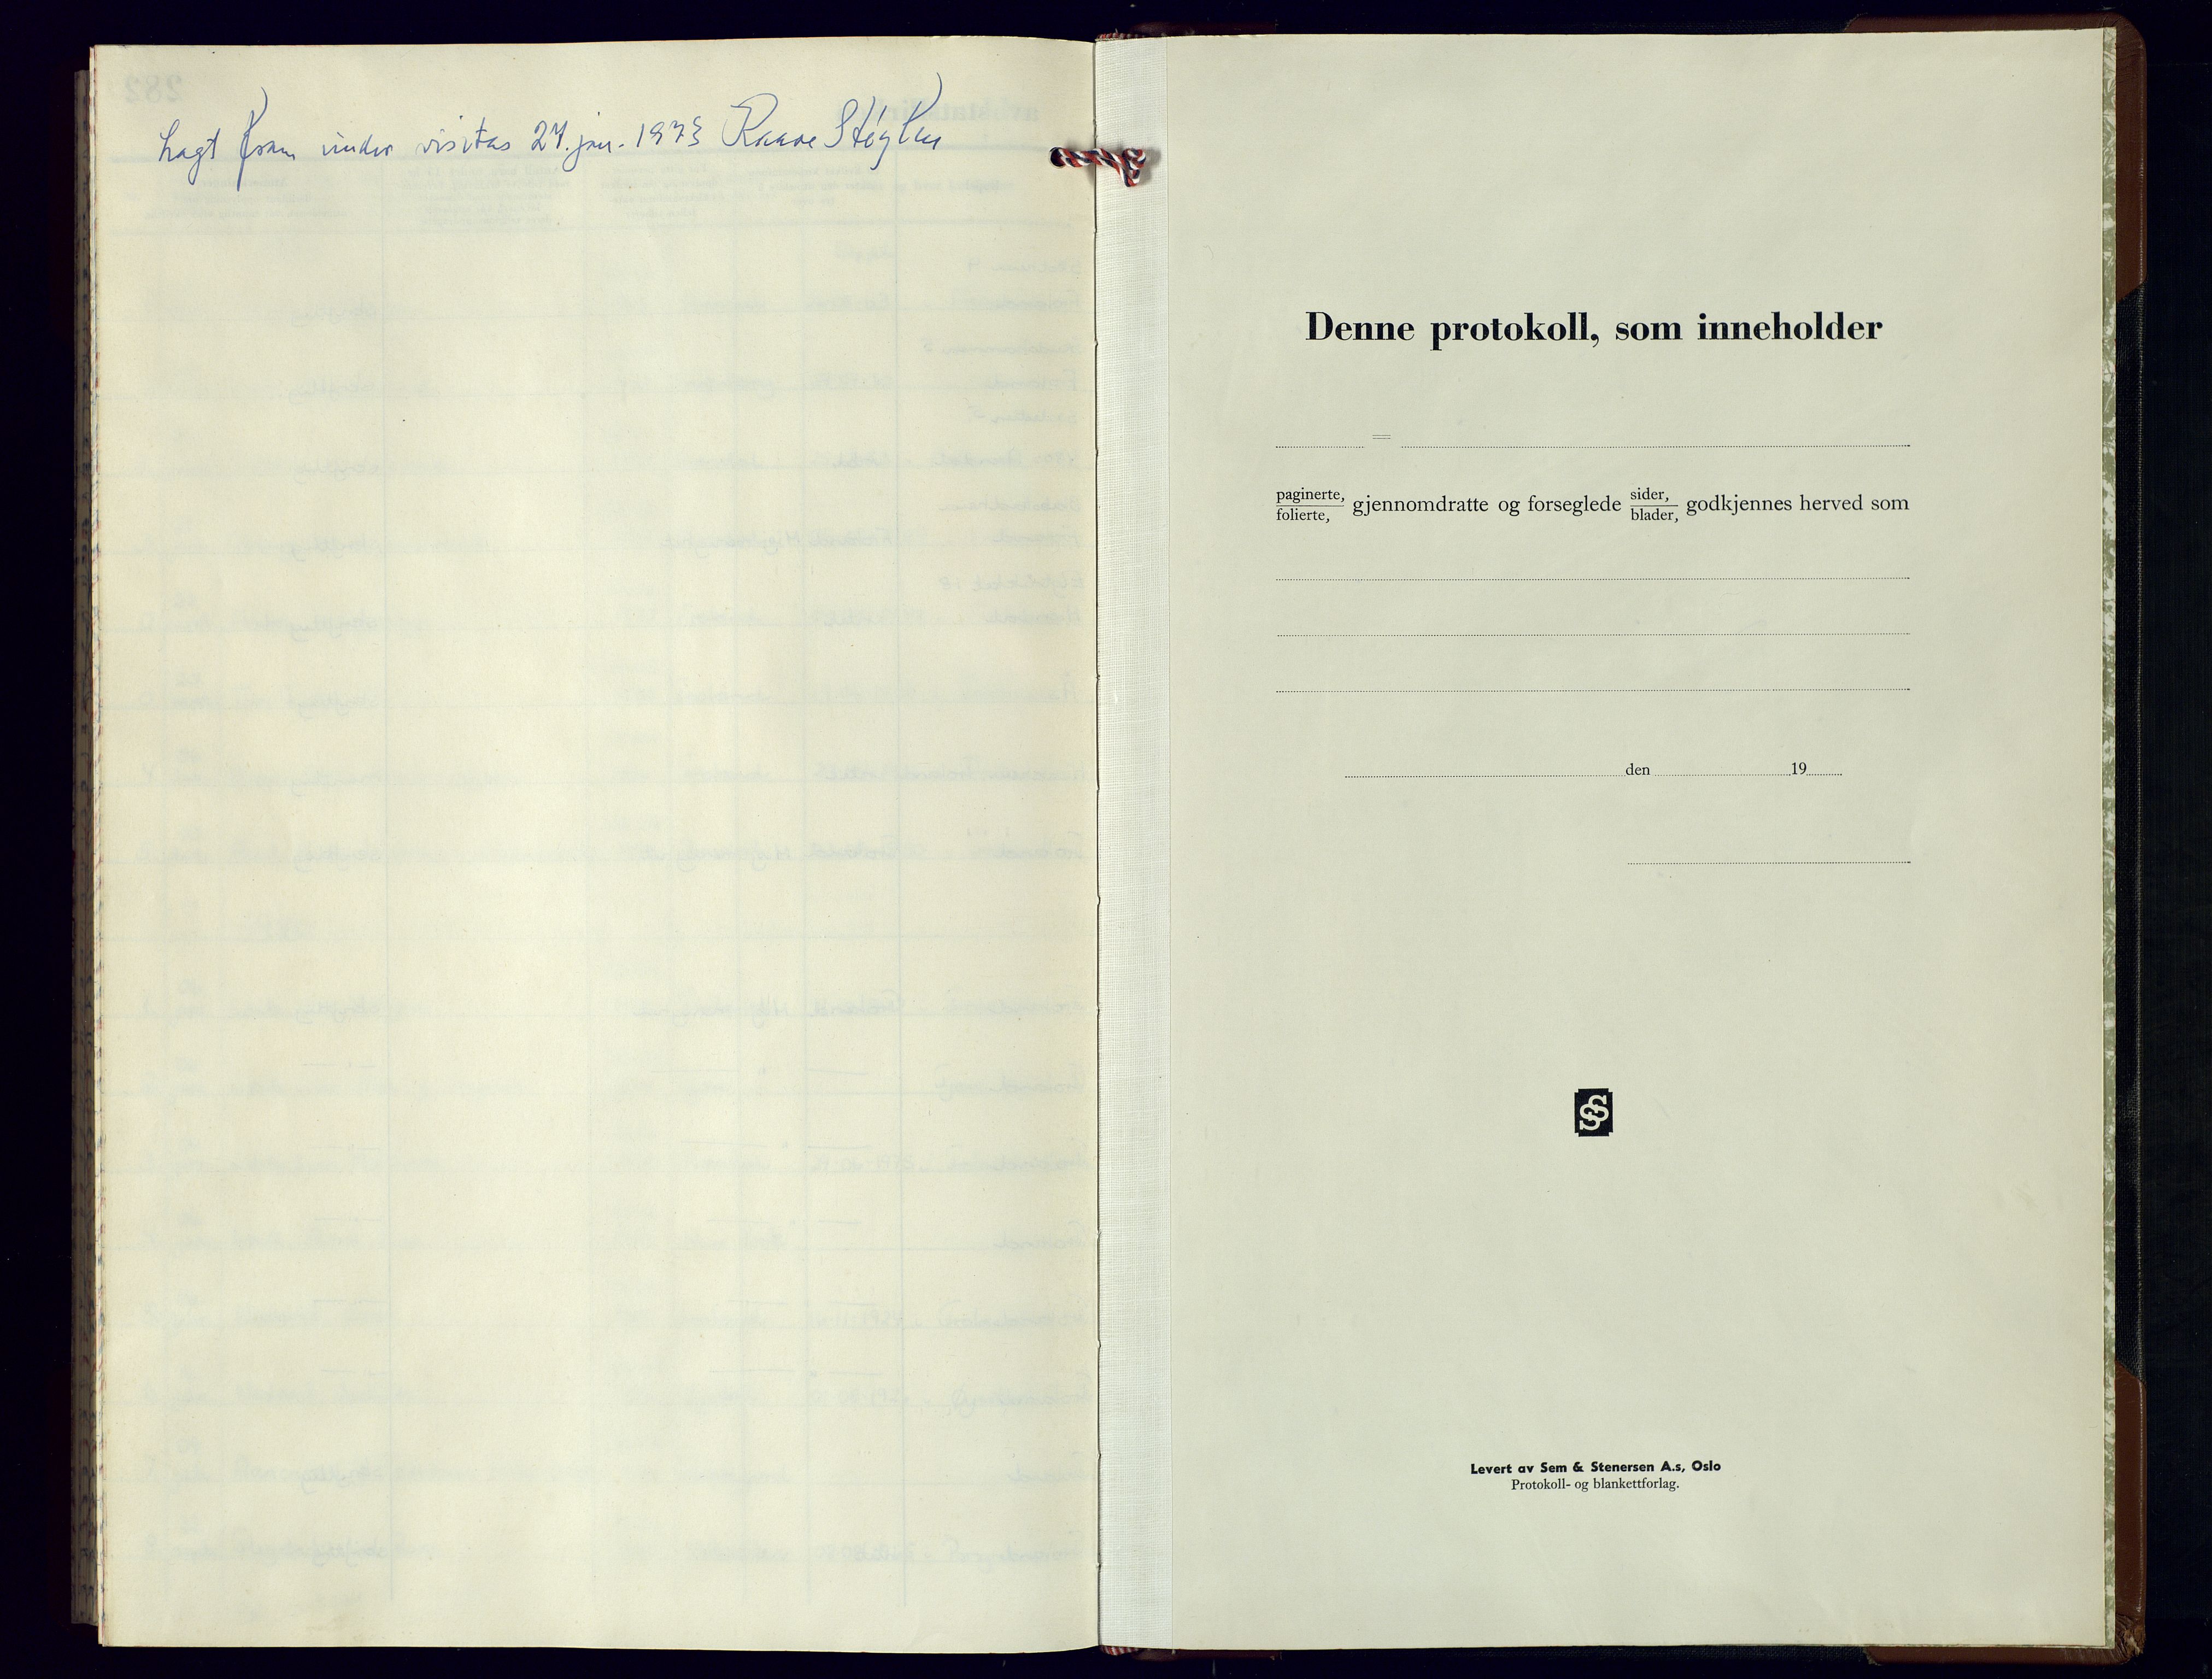 Froland sokneprestkontor, SAK/1111-0013/F/Fb/L0013: Parish register (copy) no. B-13, 1968-1983